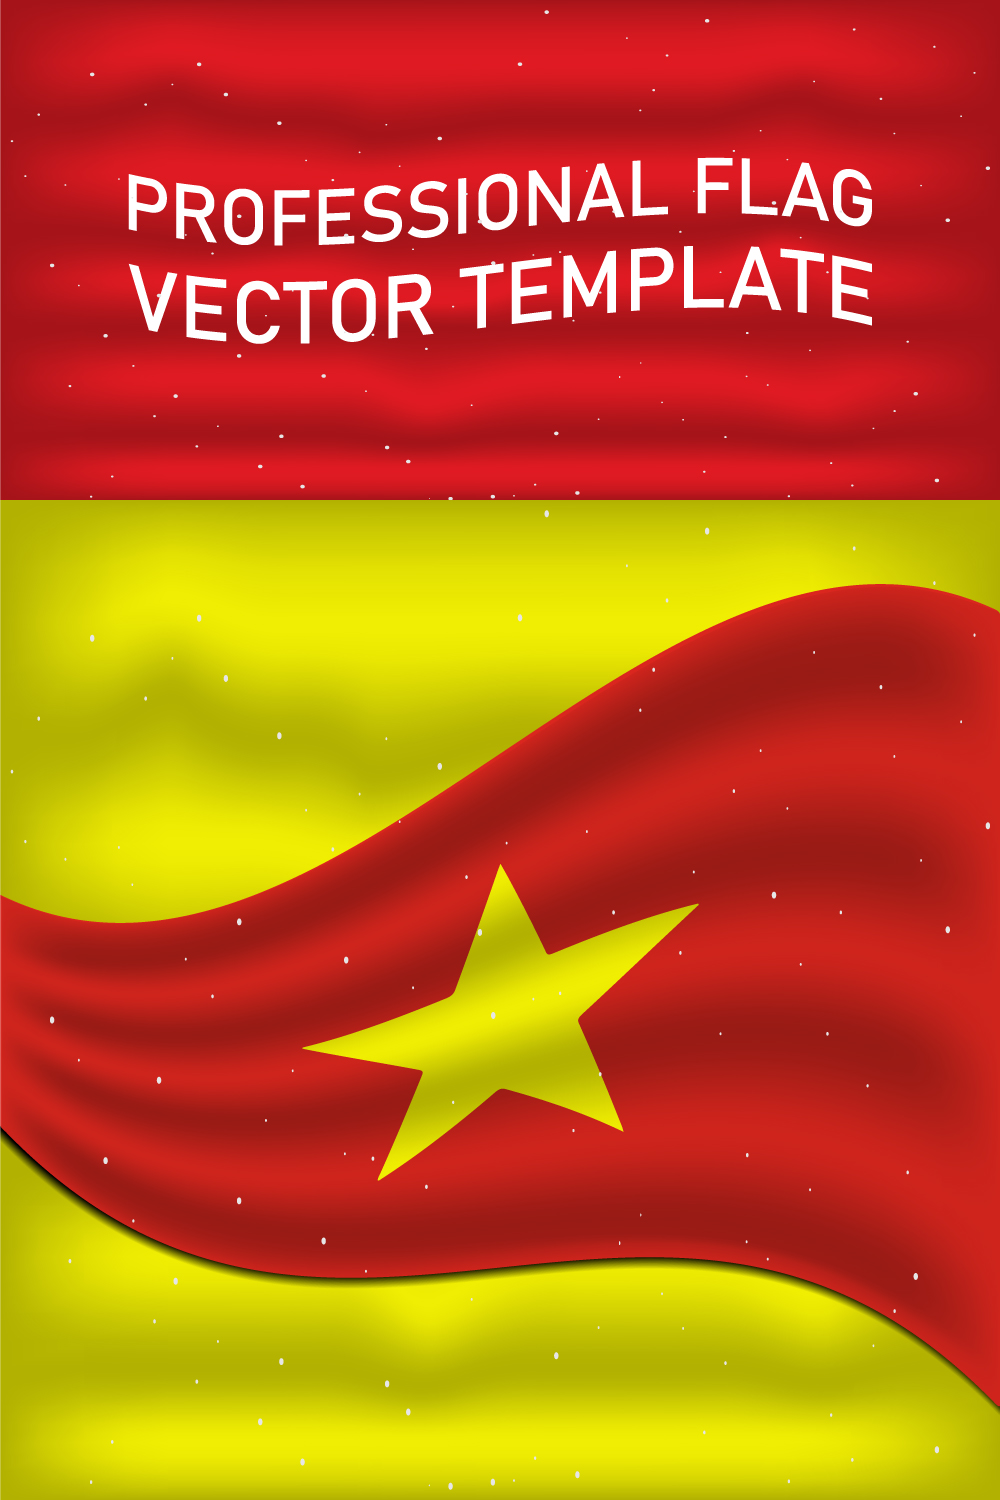 Amazing Vietnam flag image.